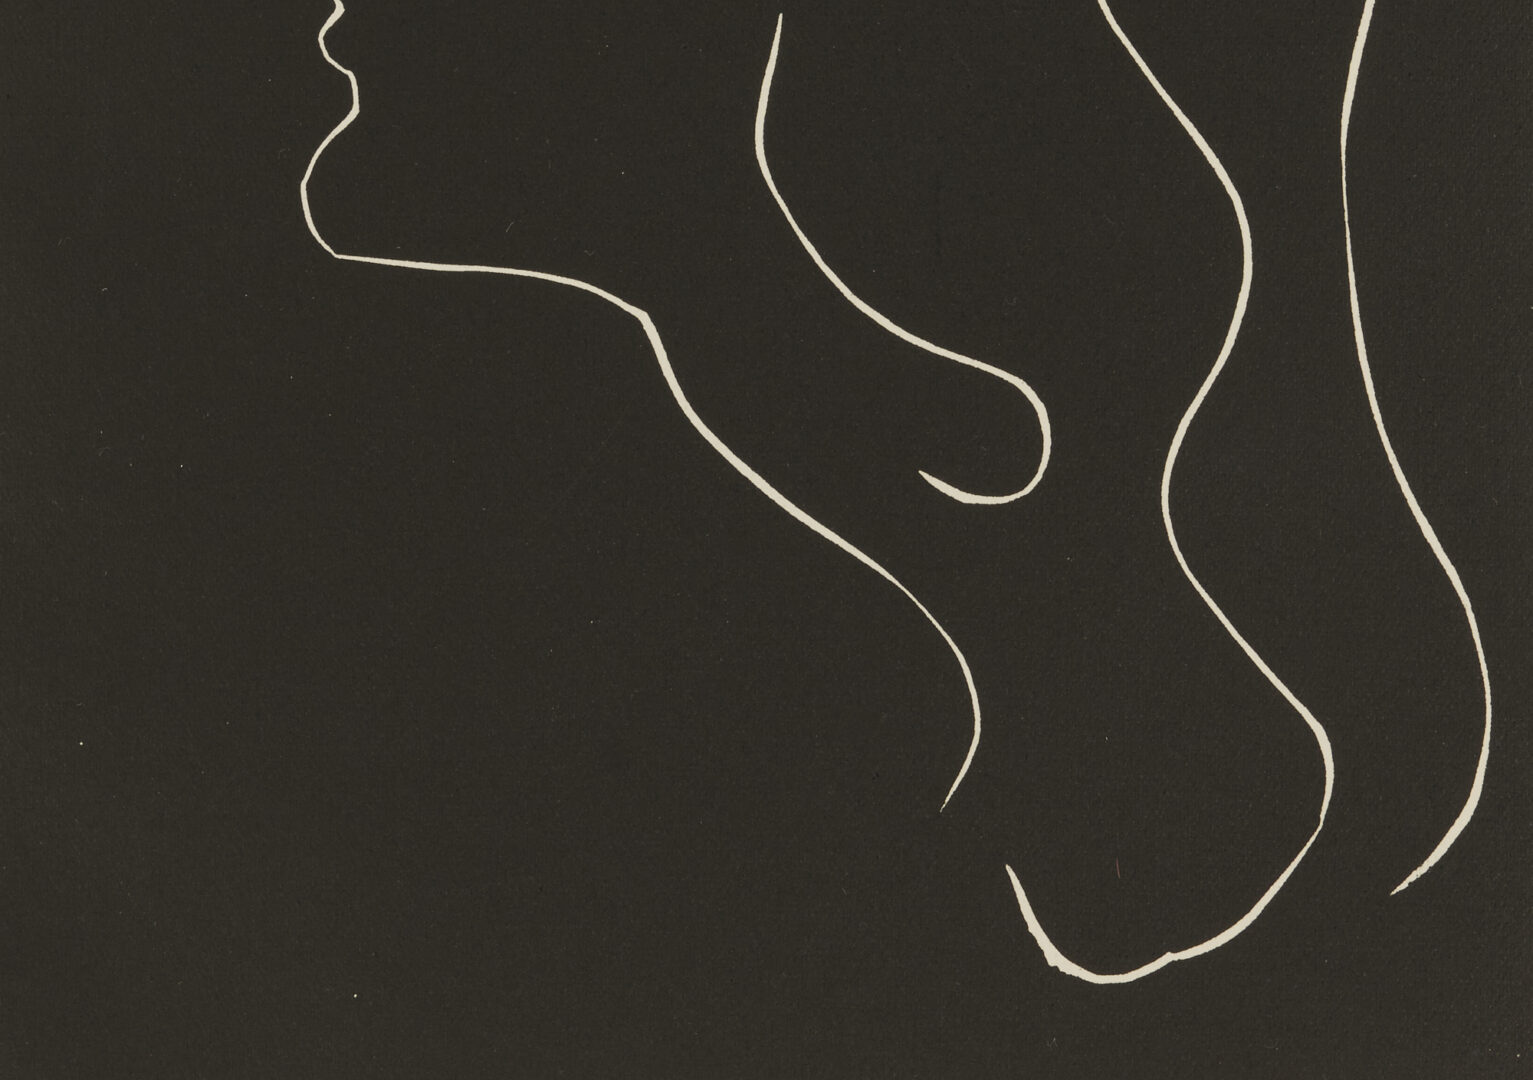 Lot 495: Henri Matisse Original Linocut, Les Miroirs Profonds / Pierre A Feu, 1947